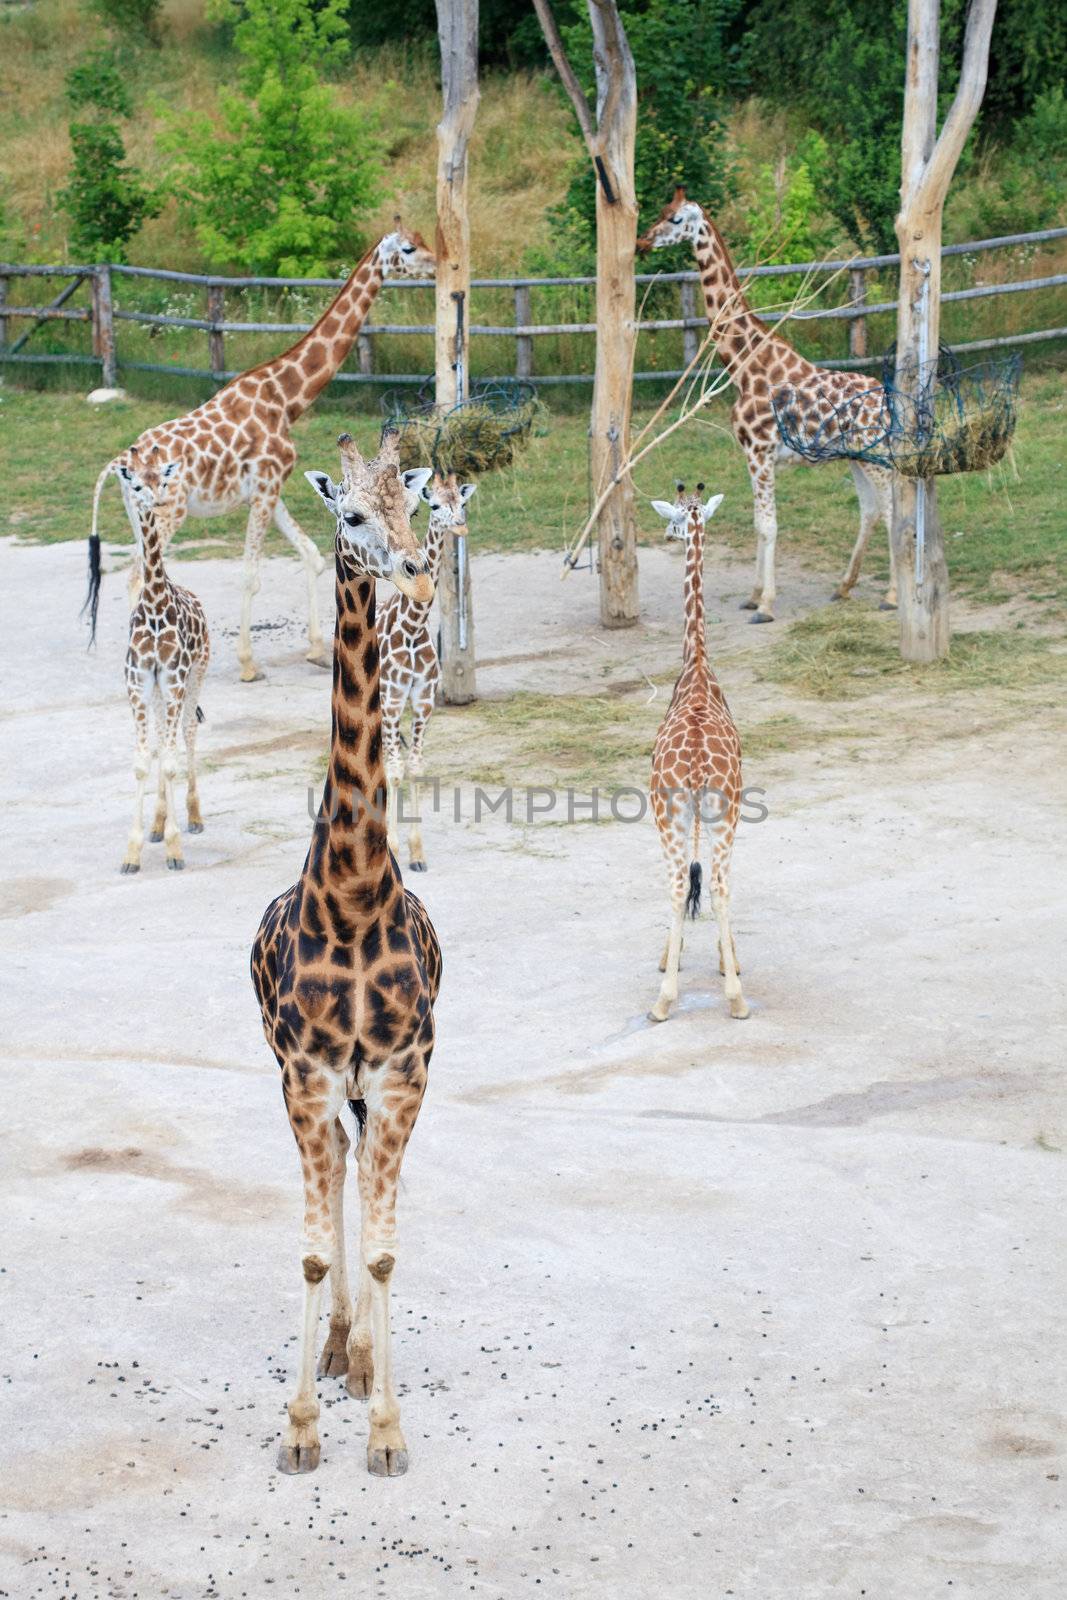 giraffes in the savanna